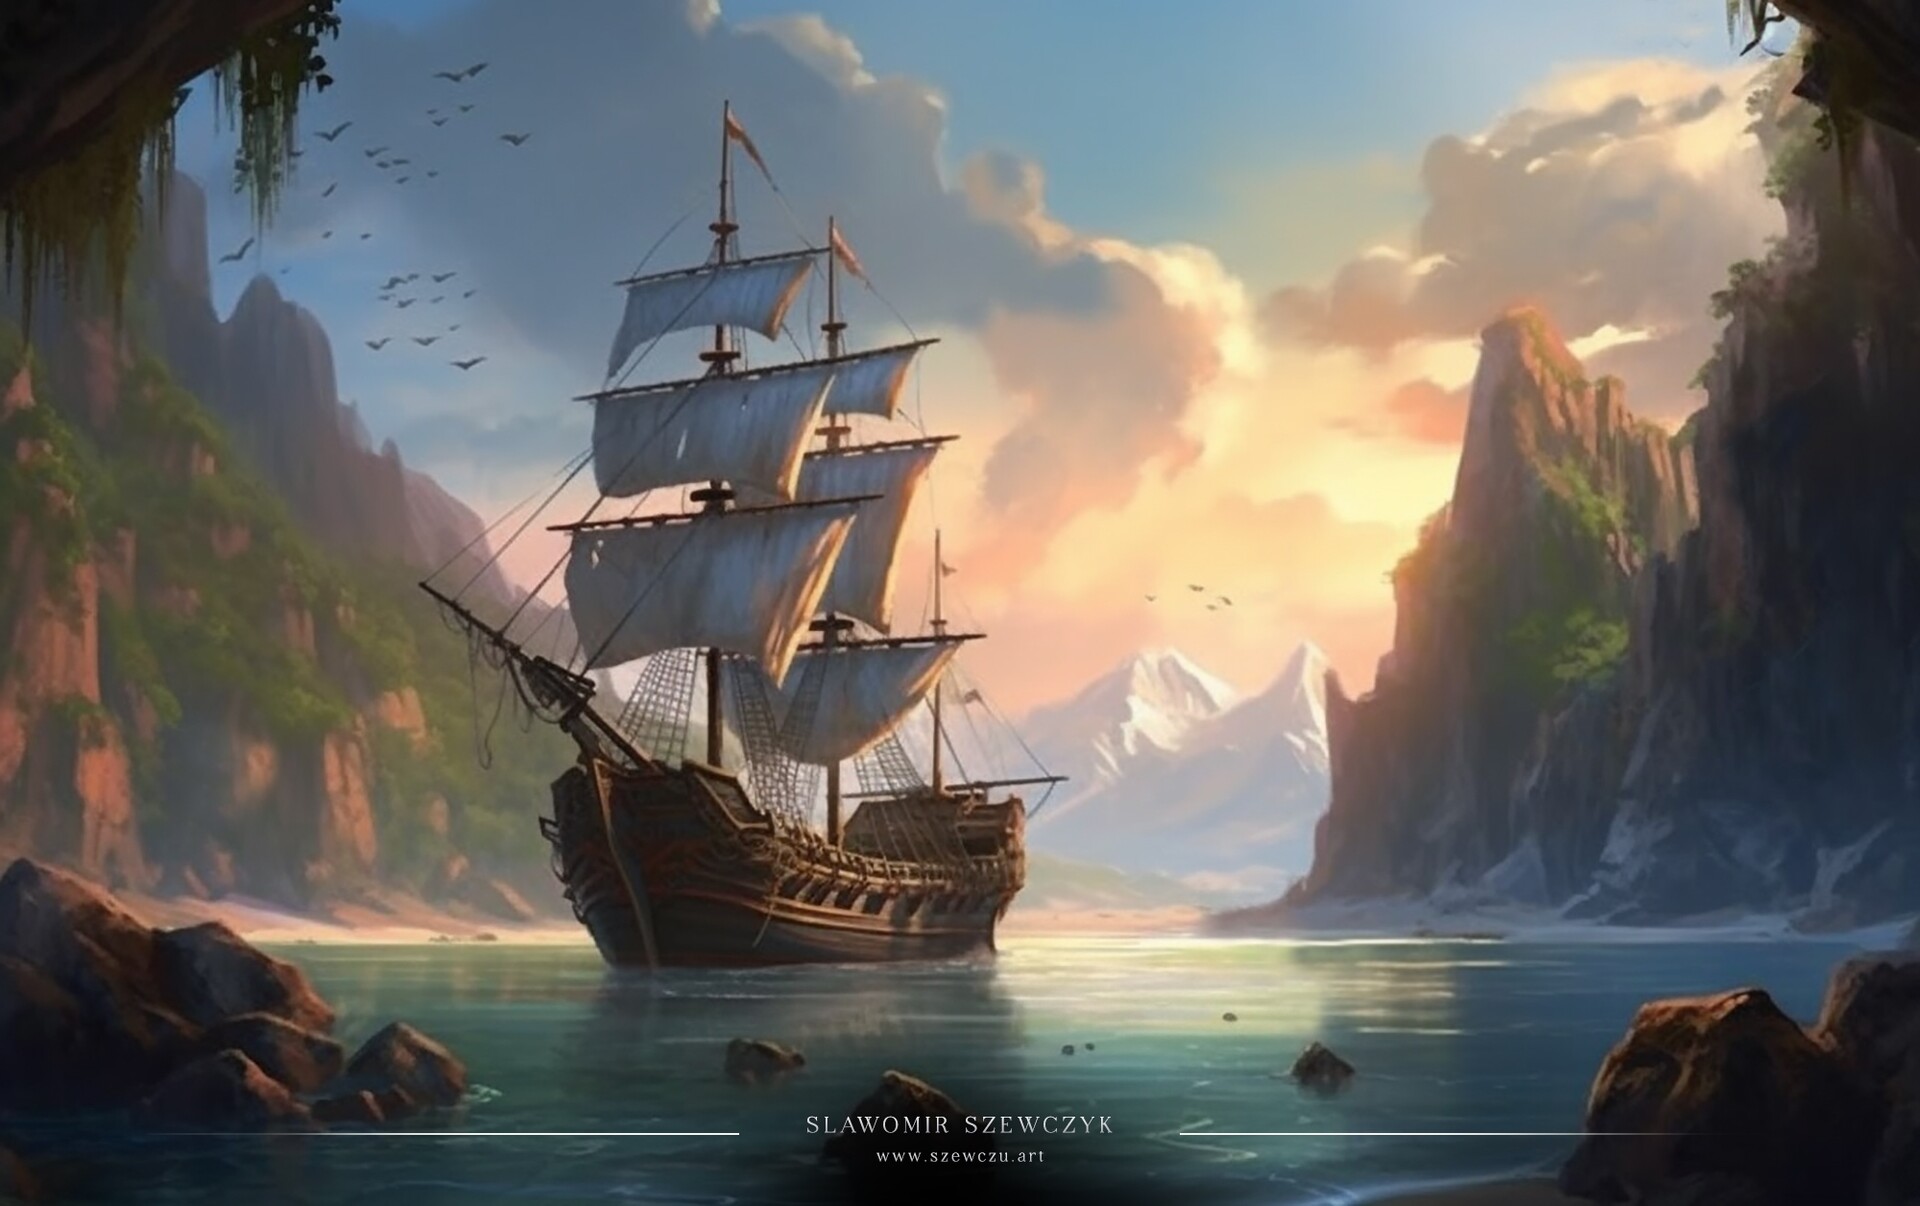 ArtStation - The pirate adventure begins!